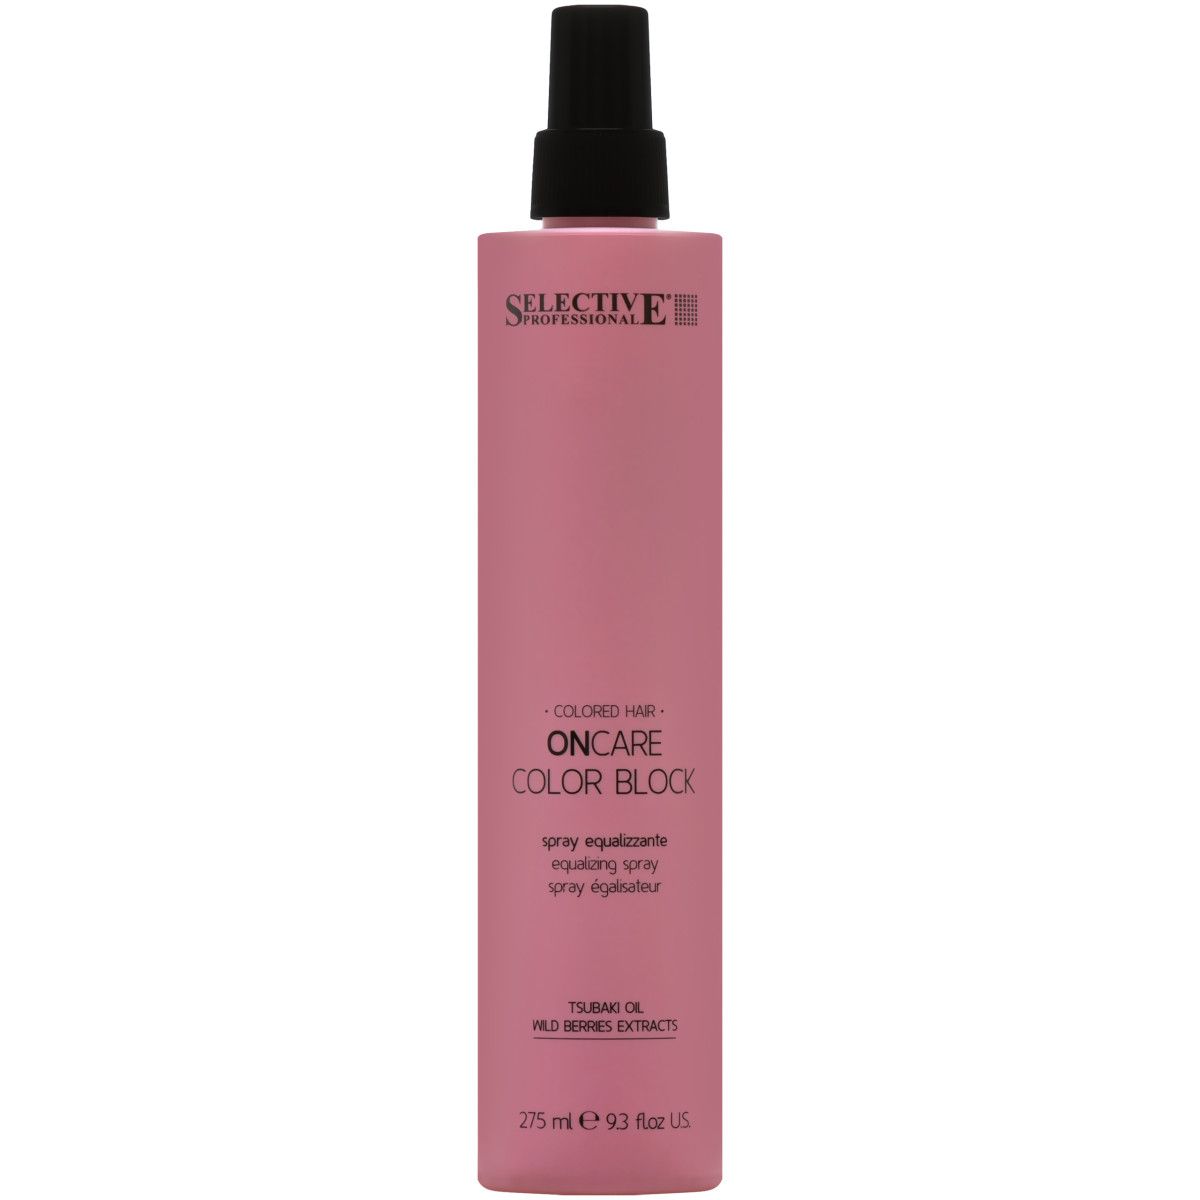 Selective On Care Color Block Equalizer - spray do włosów farbowanych, 275ml